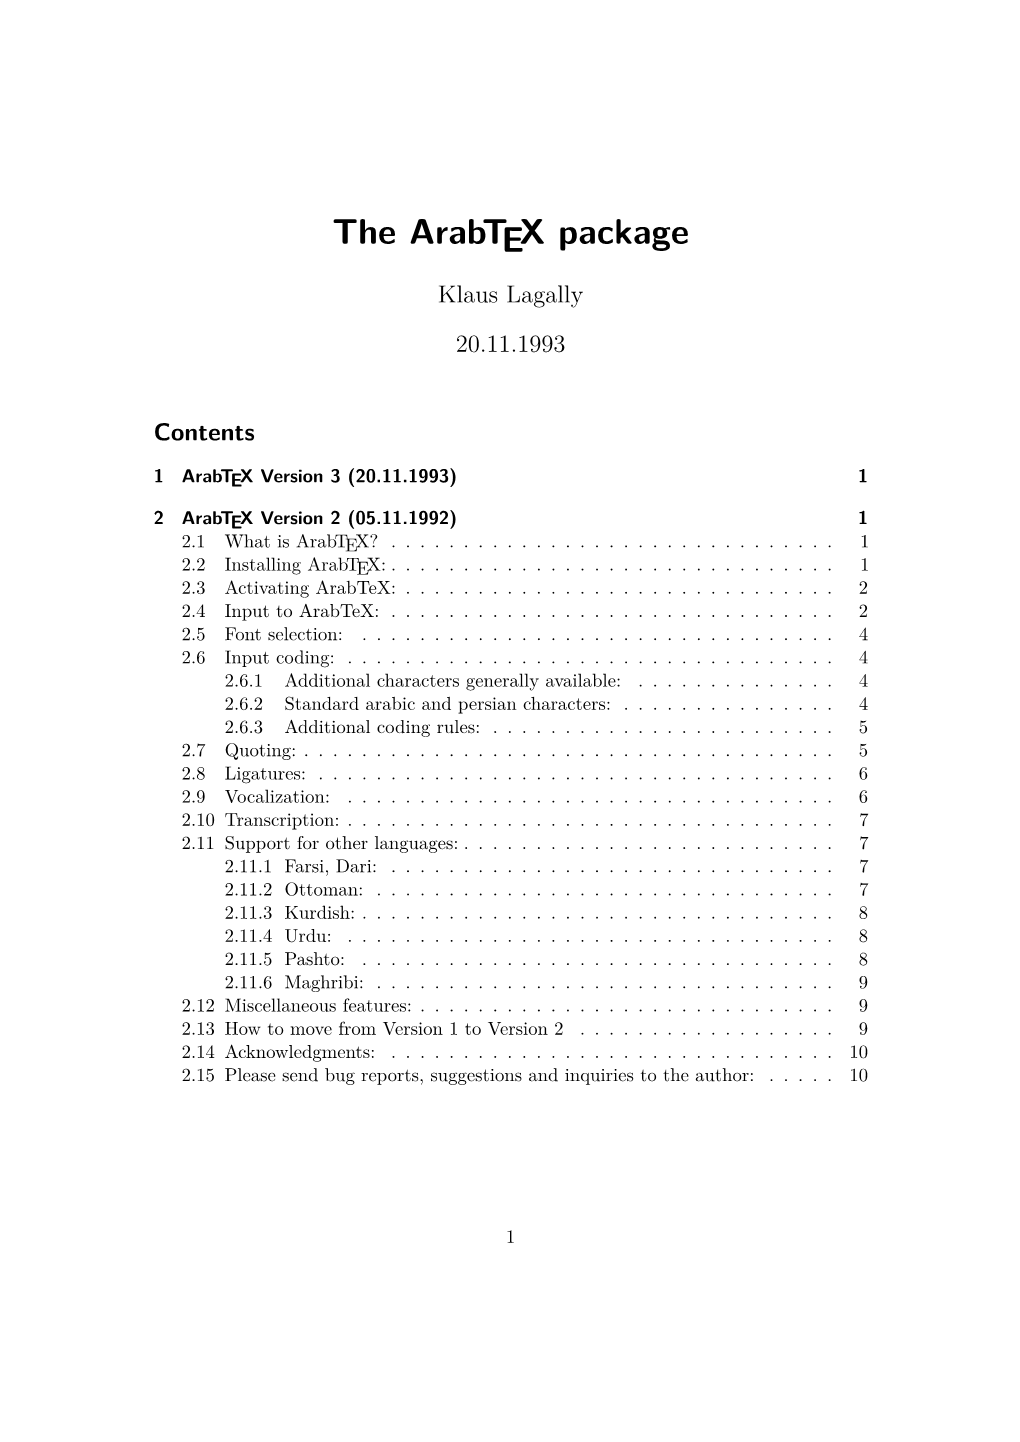 The Arabtex Package Klaus Lagally